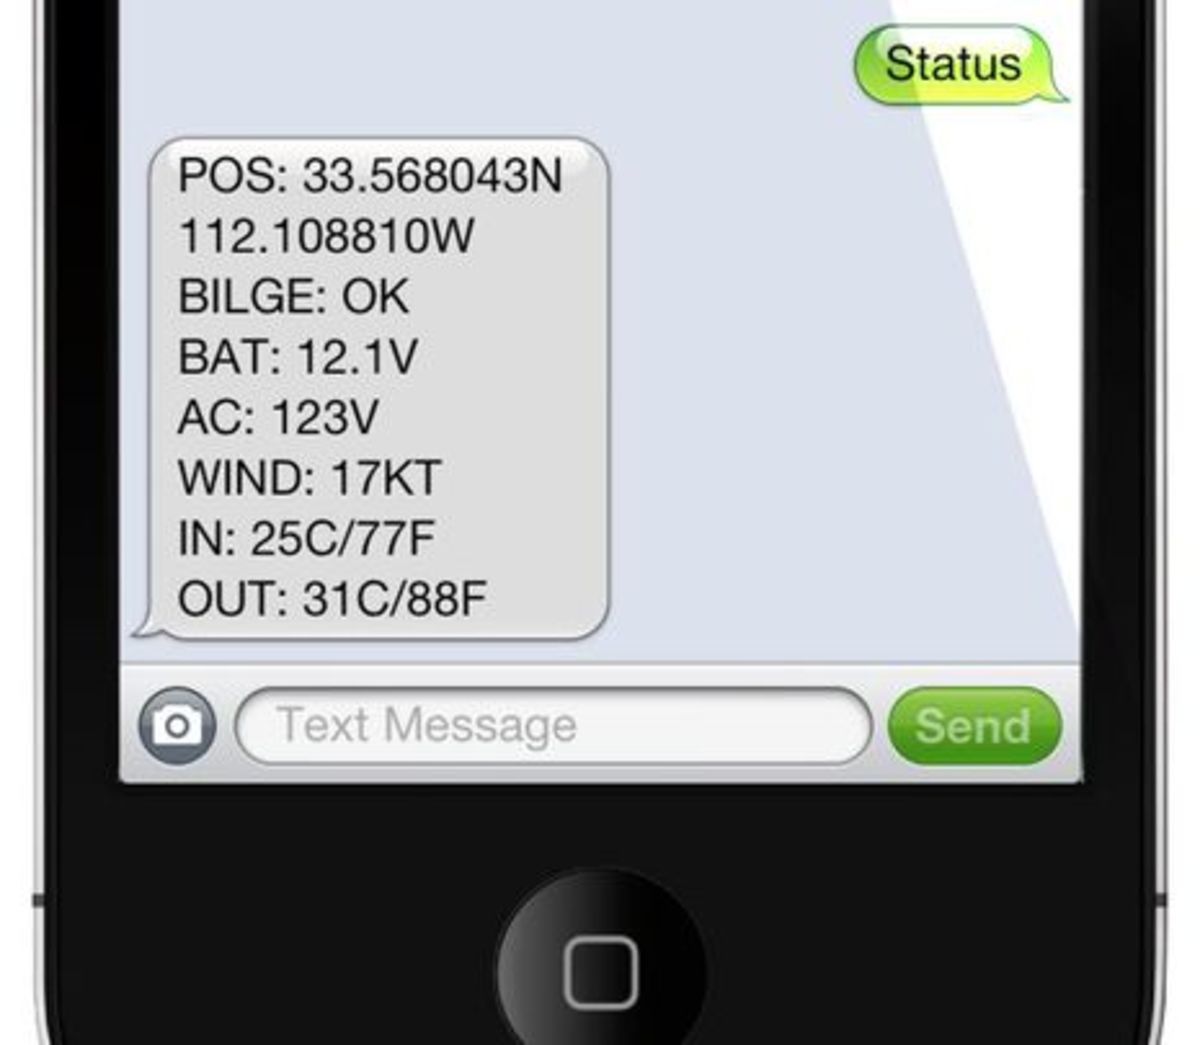 Maretron_SMS100_Status_on_iPhone.jpg